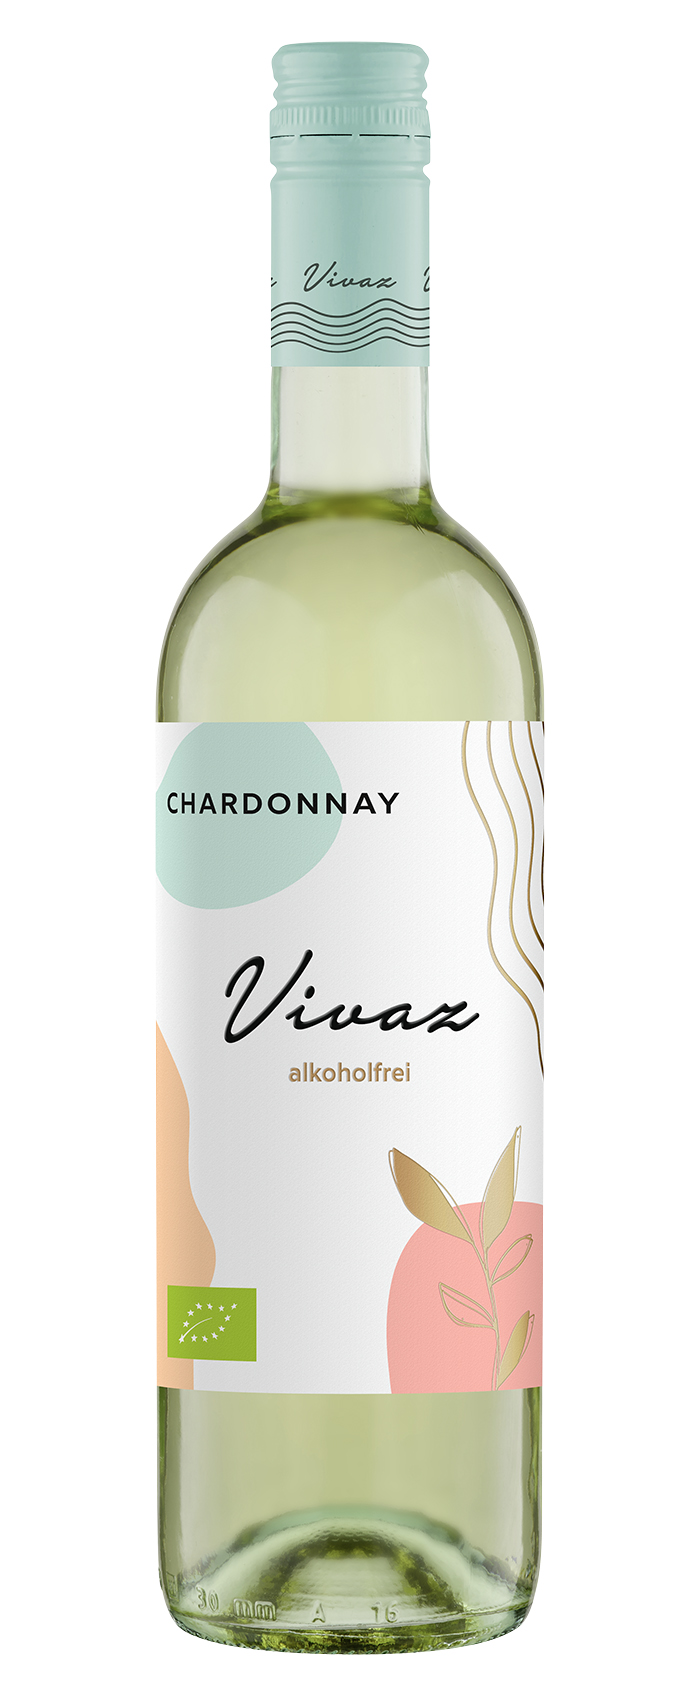  Vivaz - Chardonnay alkoholfrei BIO 0,75l